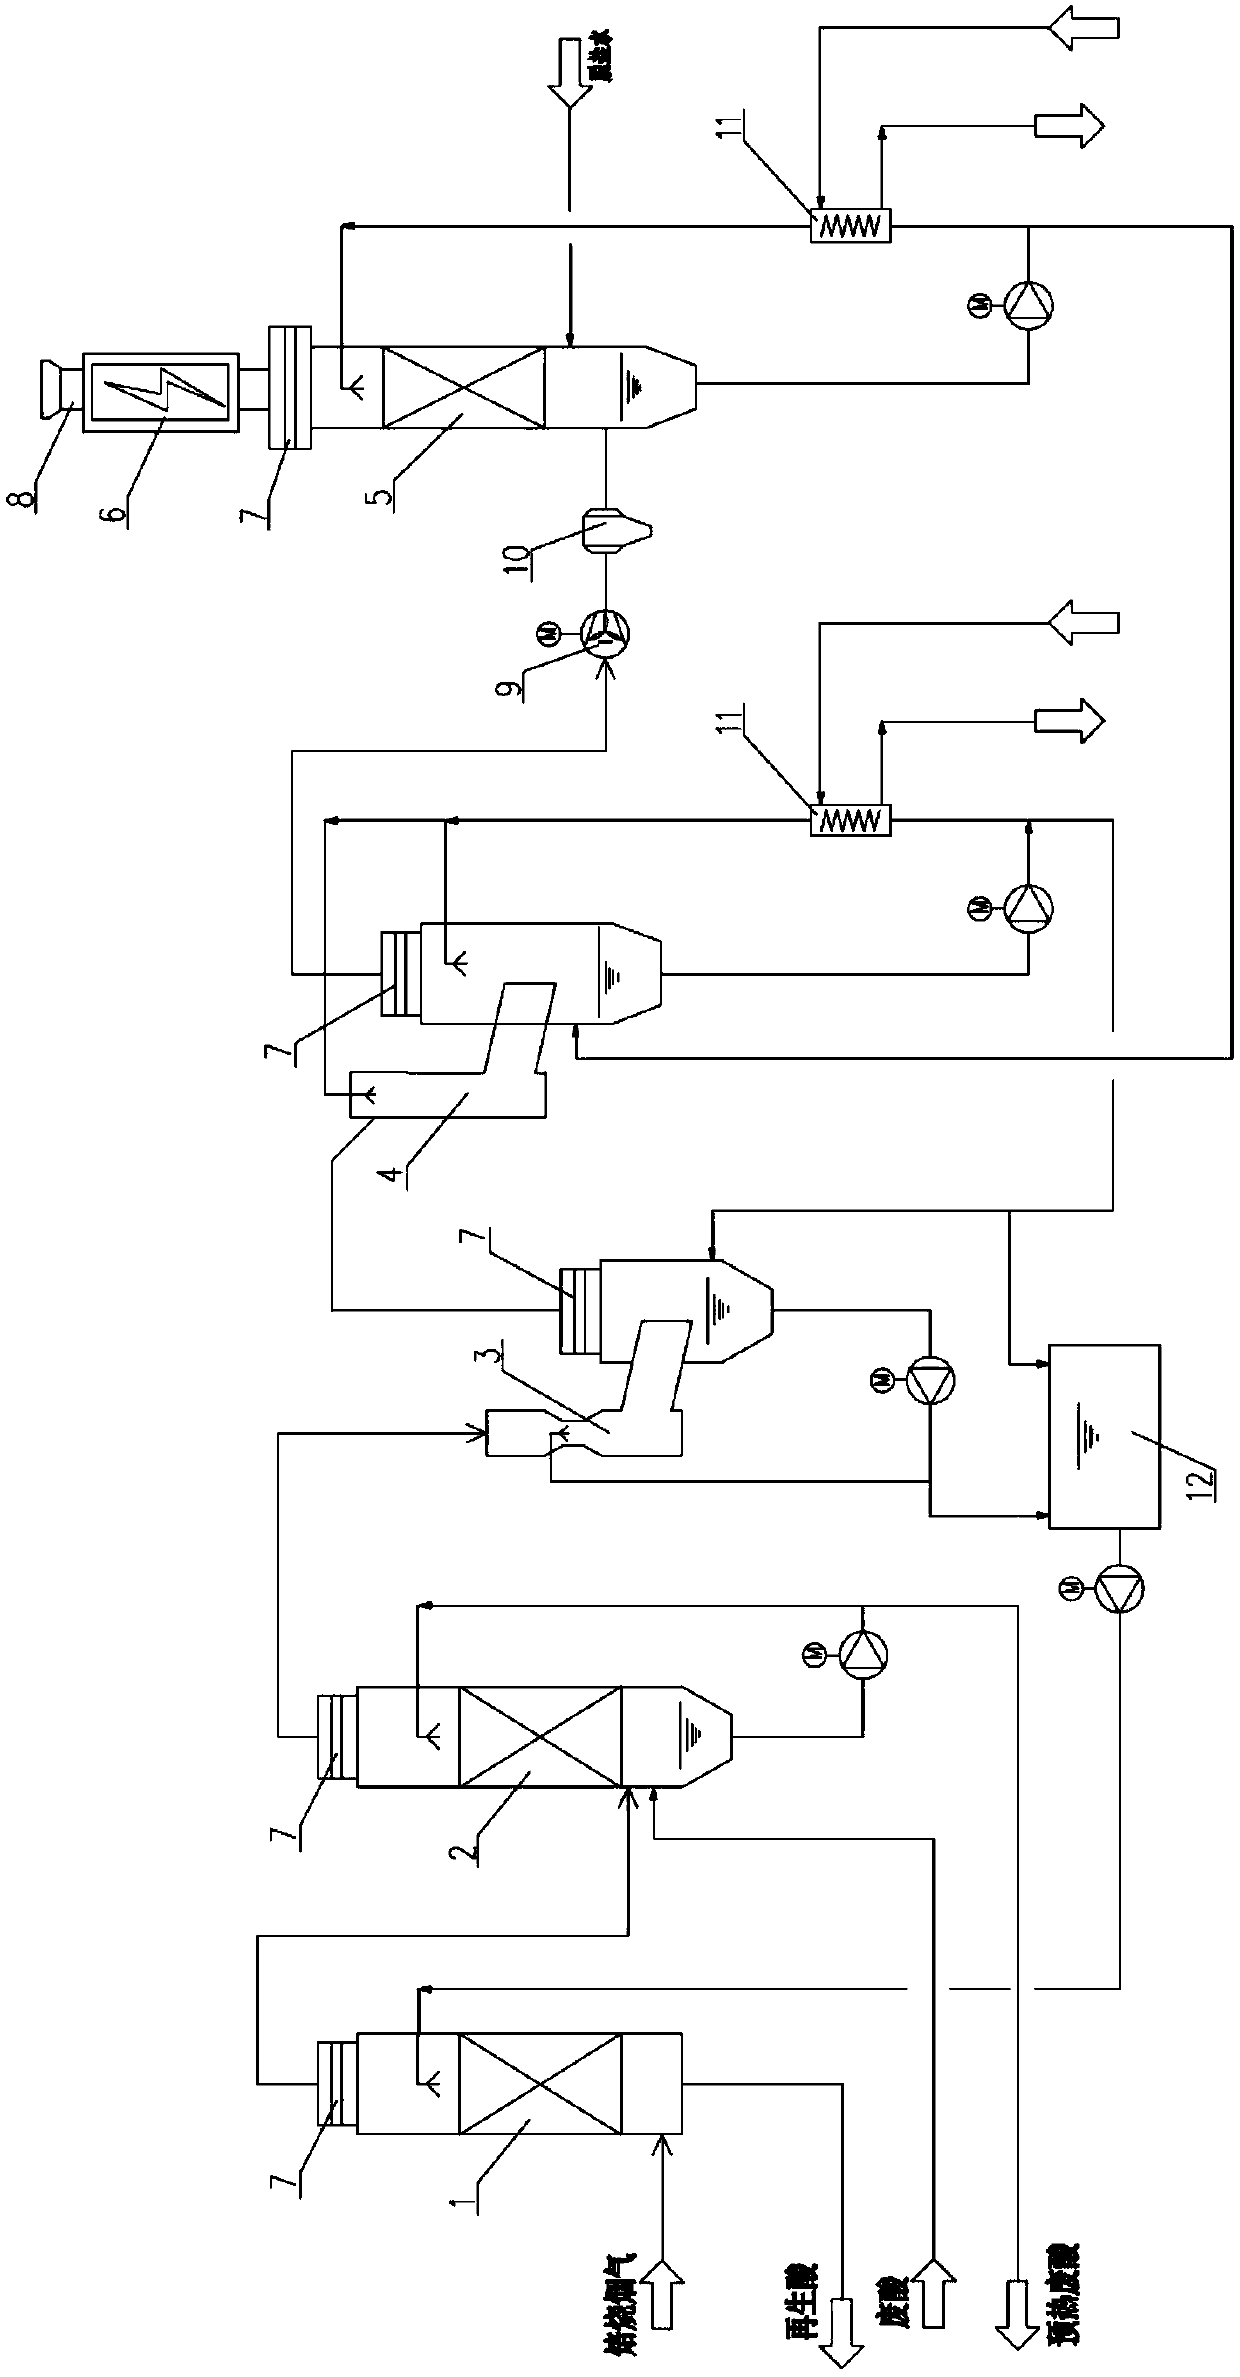 Acid regenerated flue gas treatment method and system